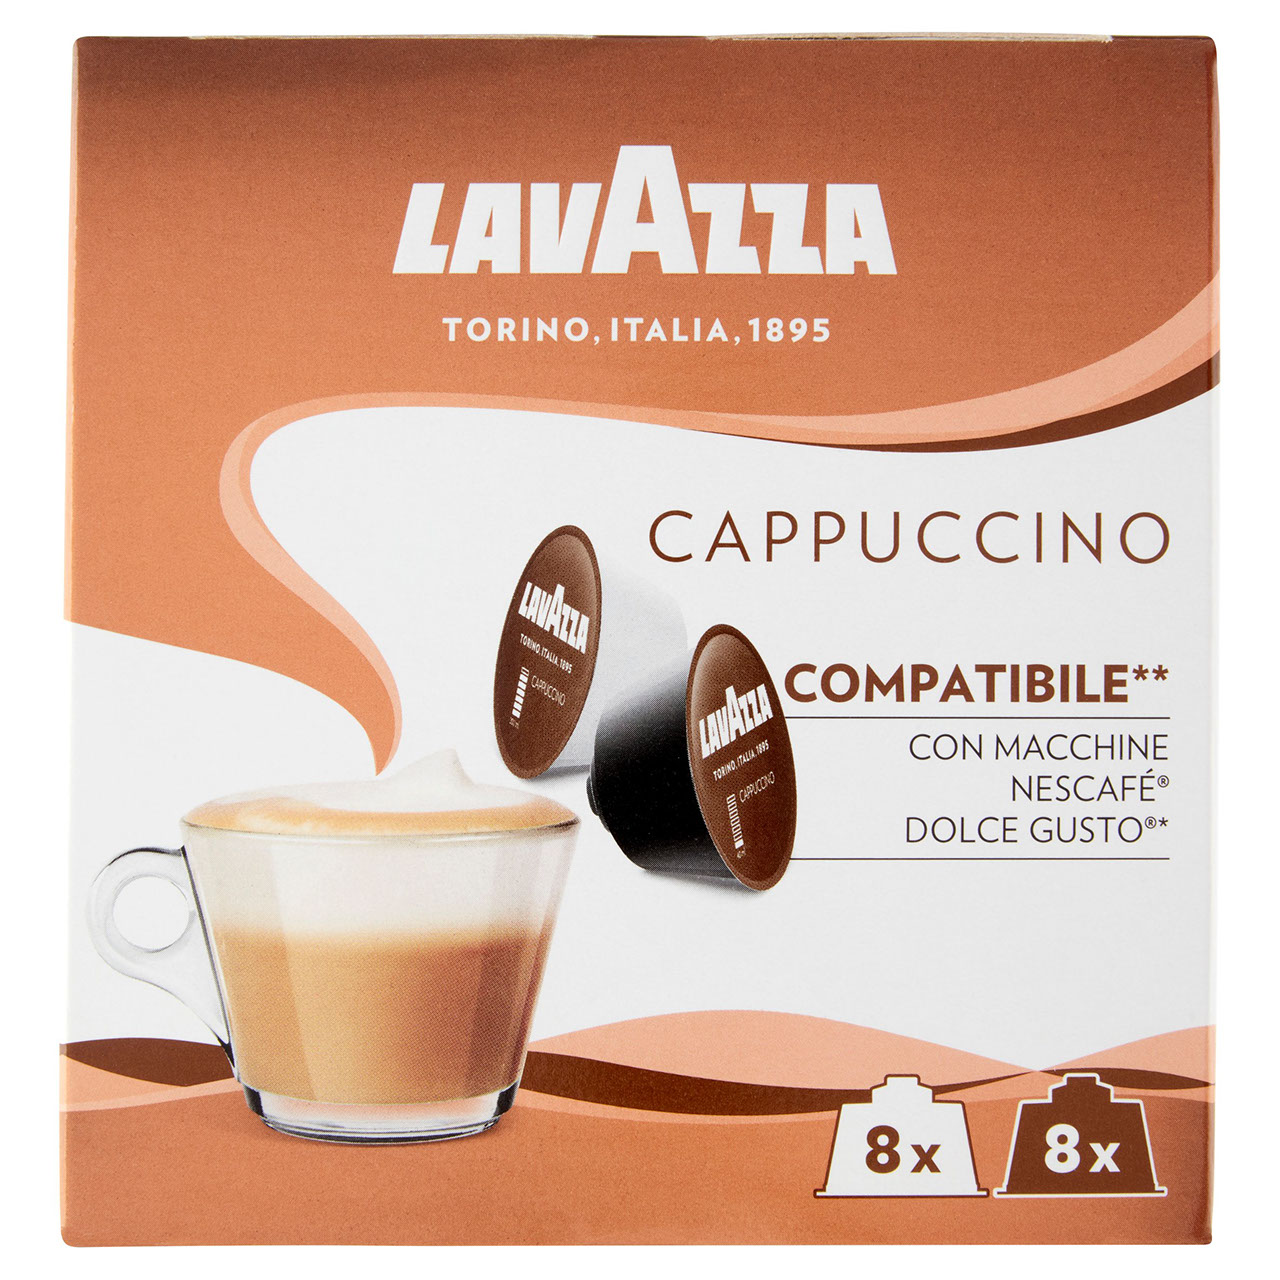 Cappuccino - Capsules Compatibles Dolce Gusto®**